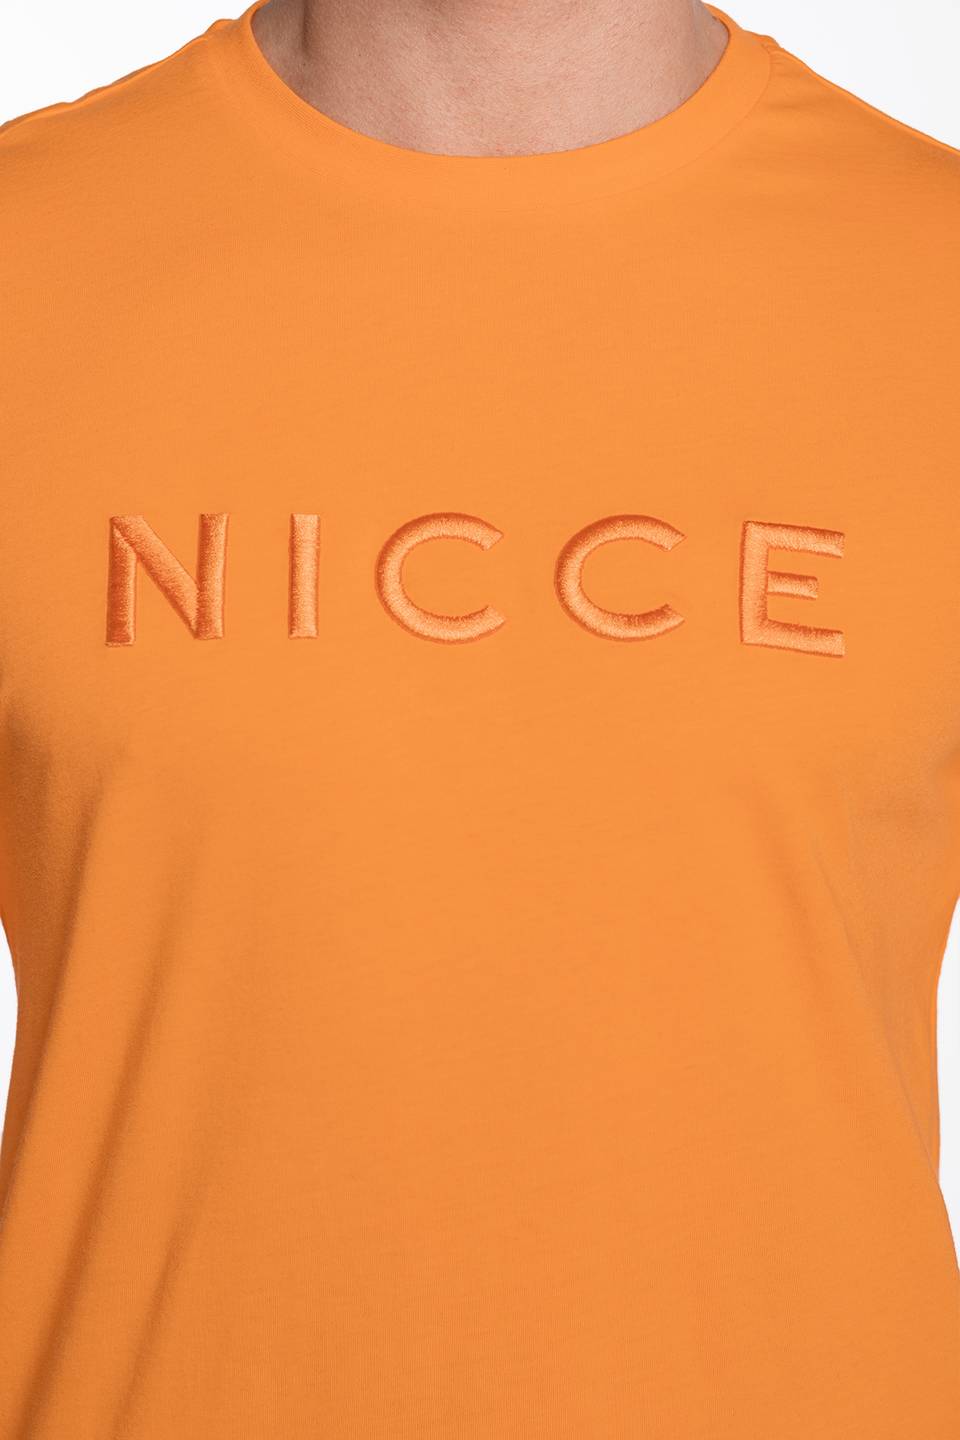 Koszulka Nicce MERCURY T-SHIRT 001-3-09-03-0251 FLAME ORANGE